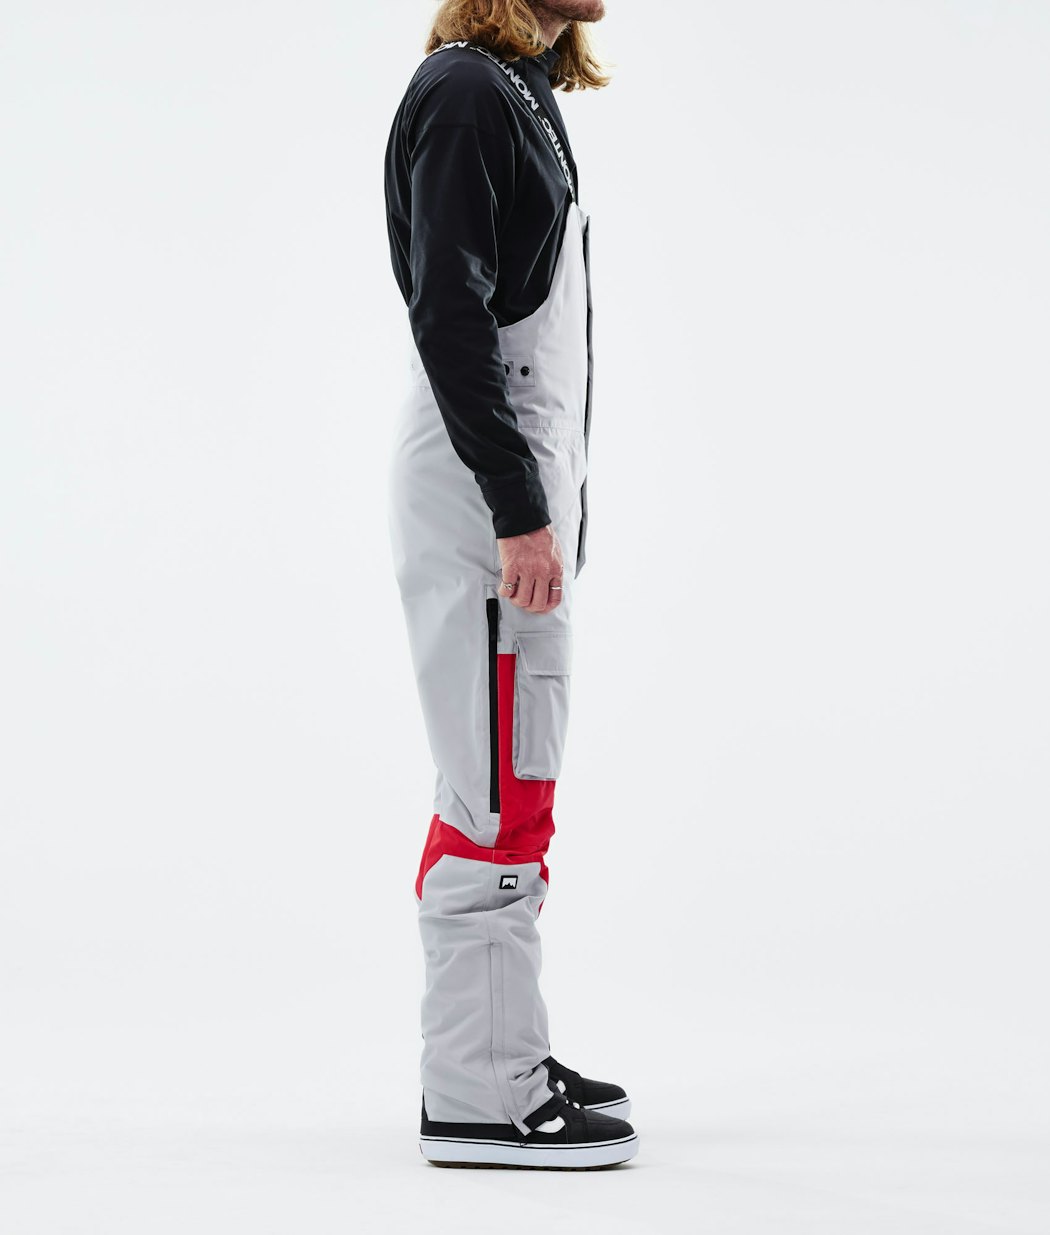 Fawk 2021 Snowboard Pants Men Light Grey/Red Renewed